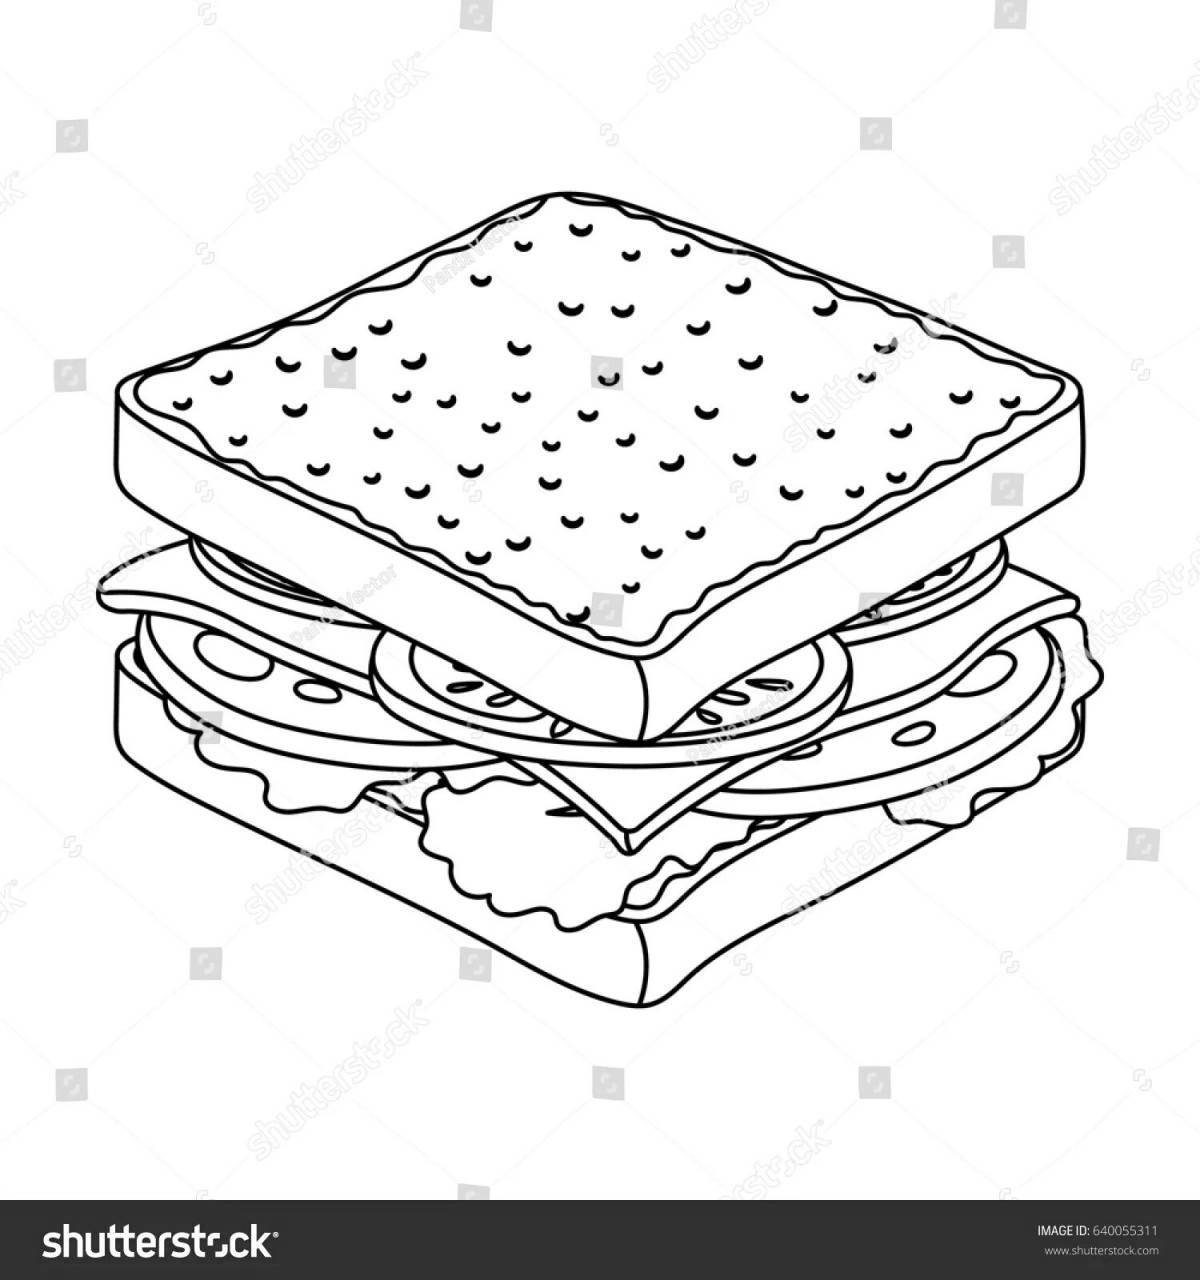 Бутерброд для детей #16